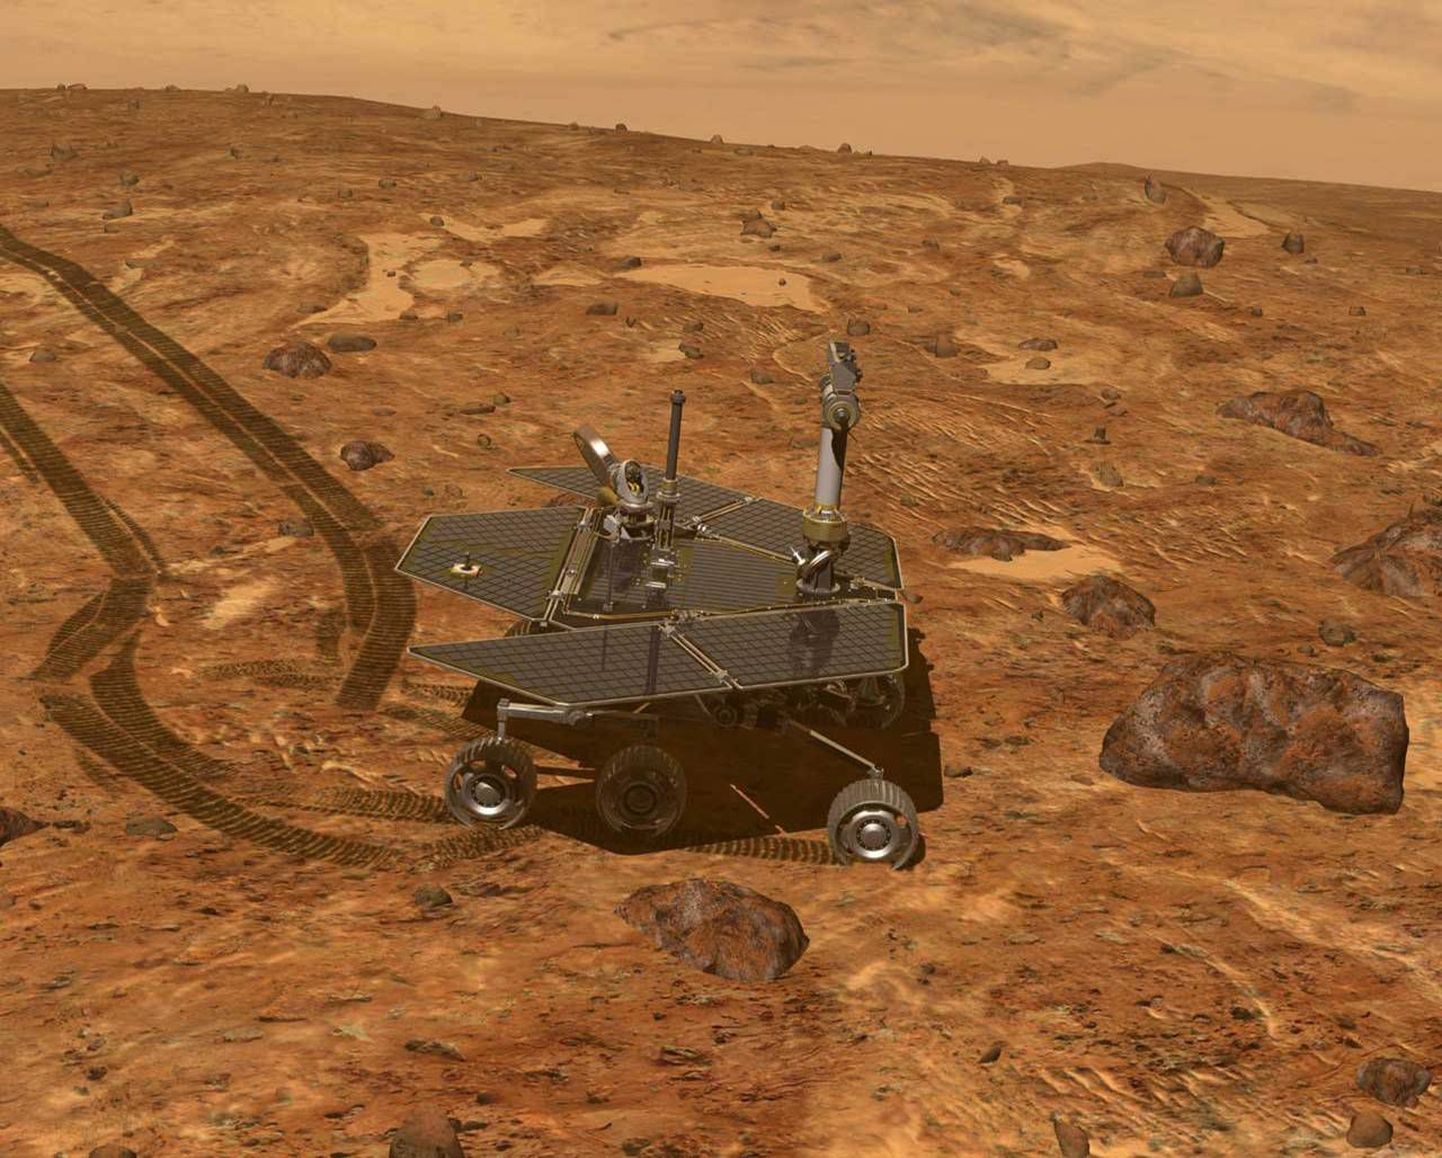 NASA kunstniku joonistus Marsi kulgurist Opportunityst